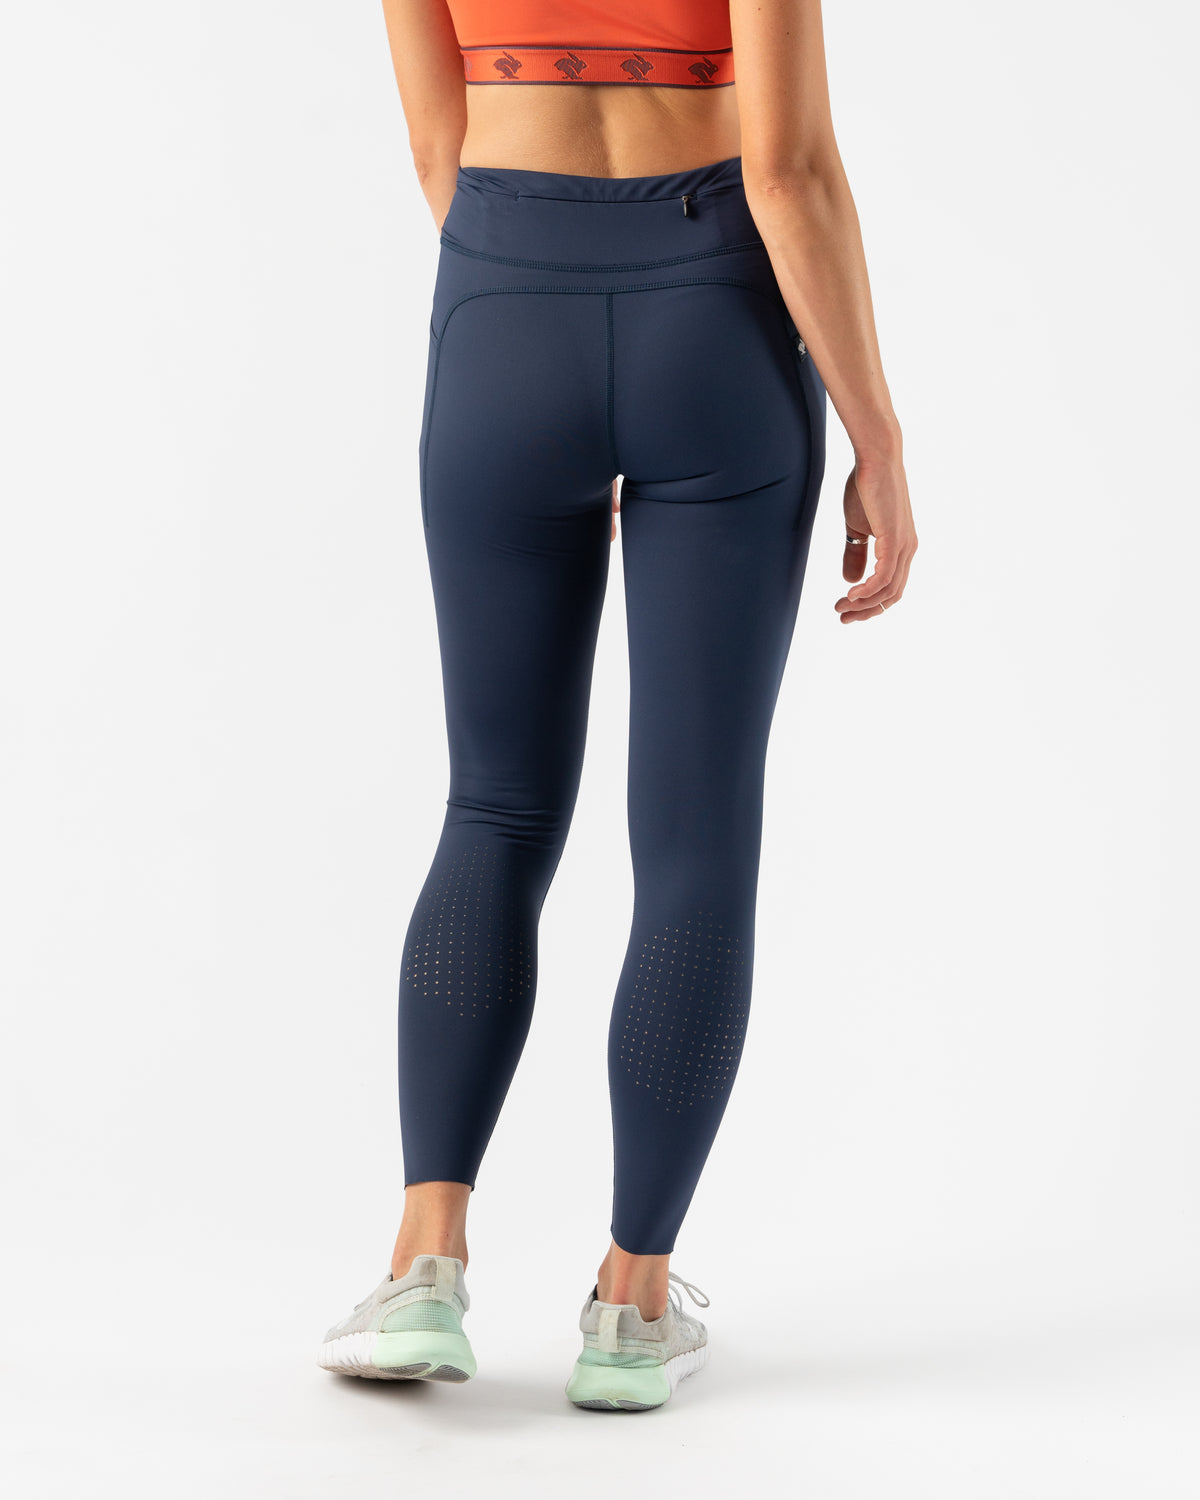 Lululemon Yoga Athletic Compression Tights Pants Zips Womens 8